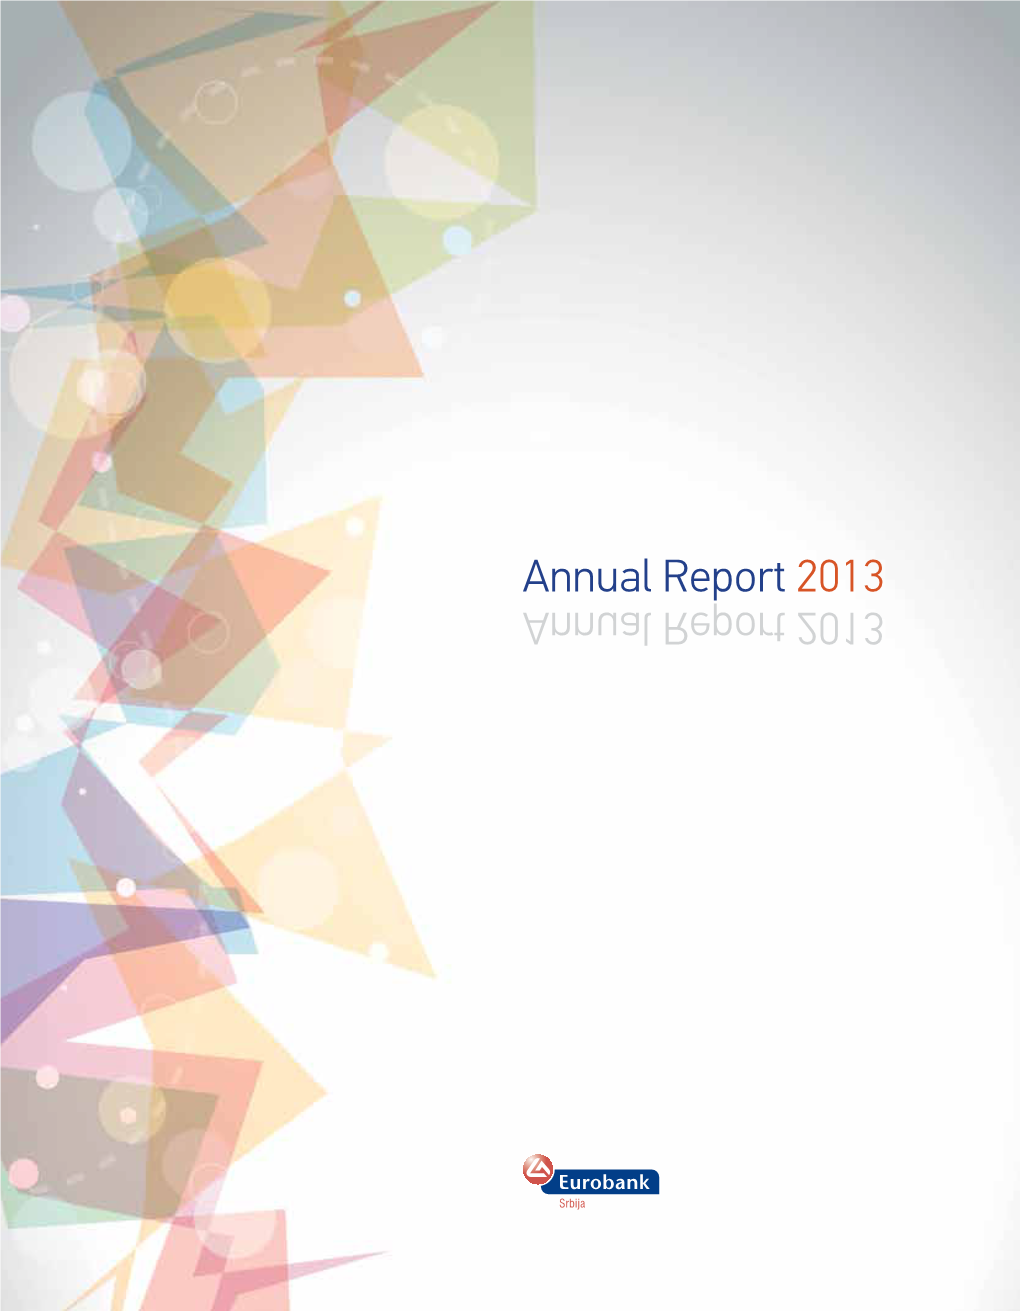 Eurobank Annual Report 2013